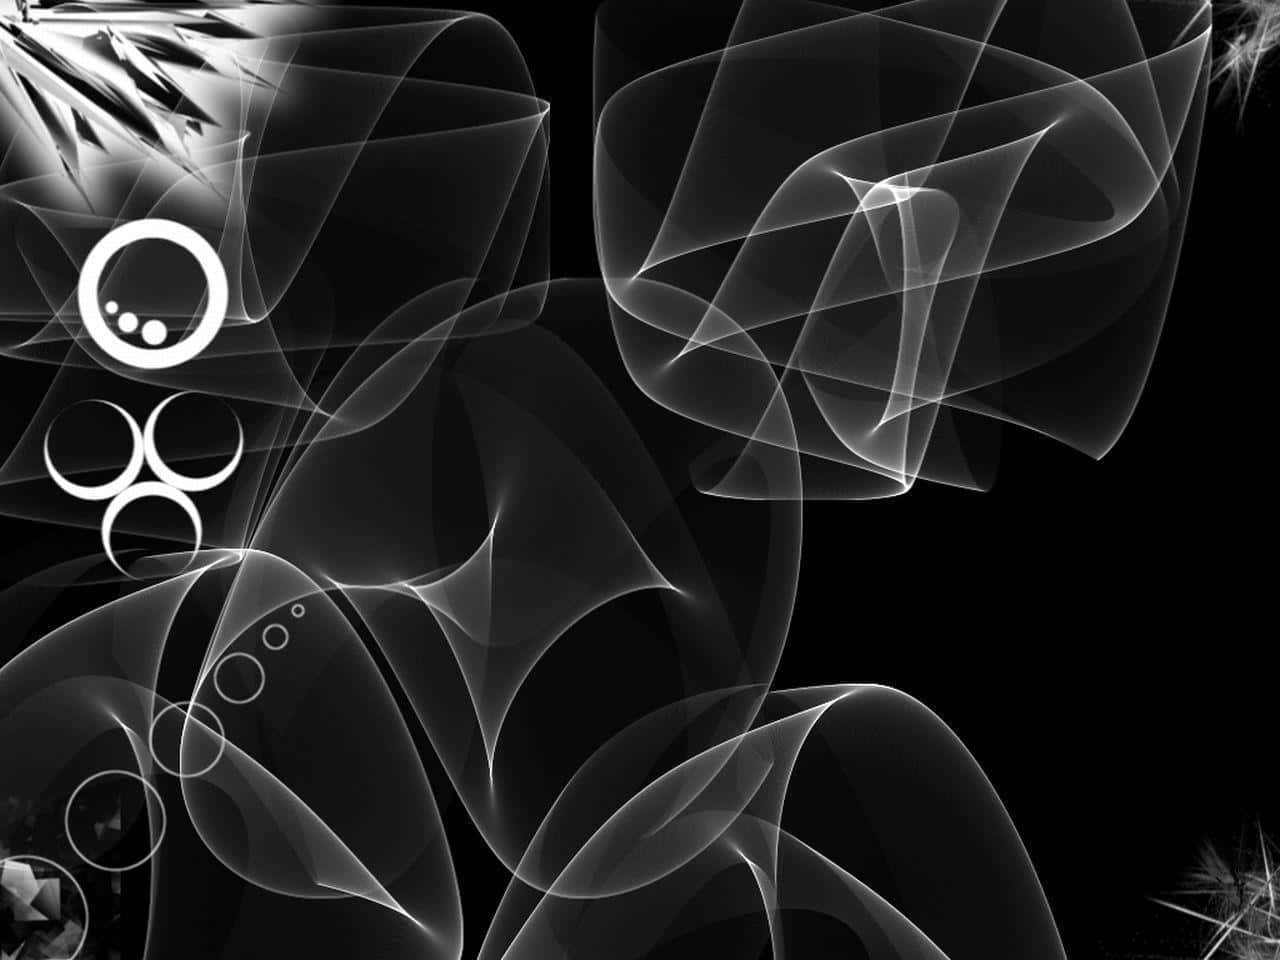 A Black And White Image Of Smoke And Swirls